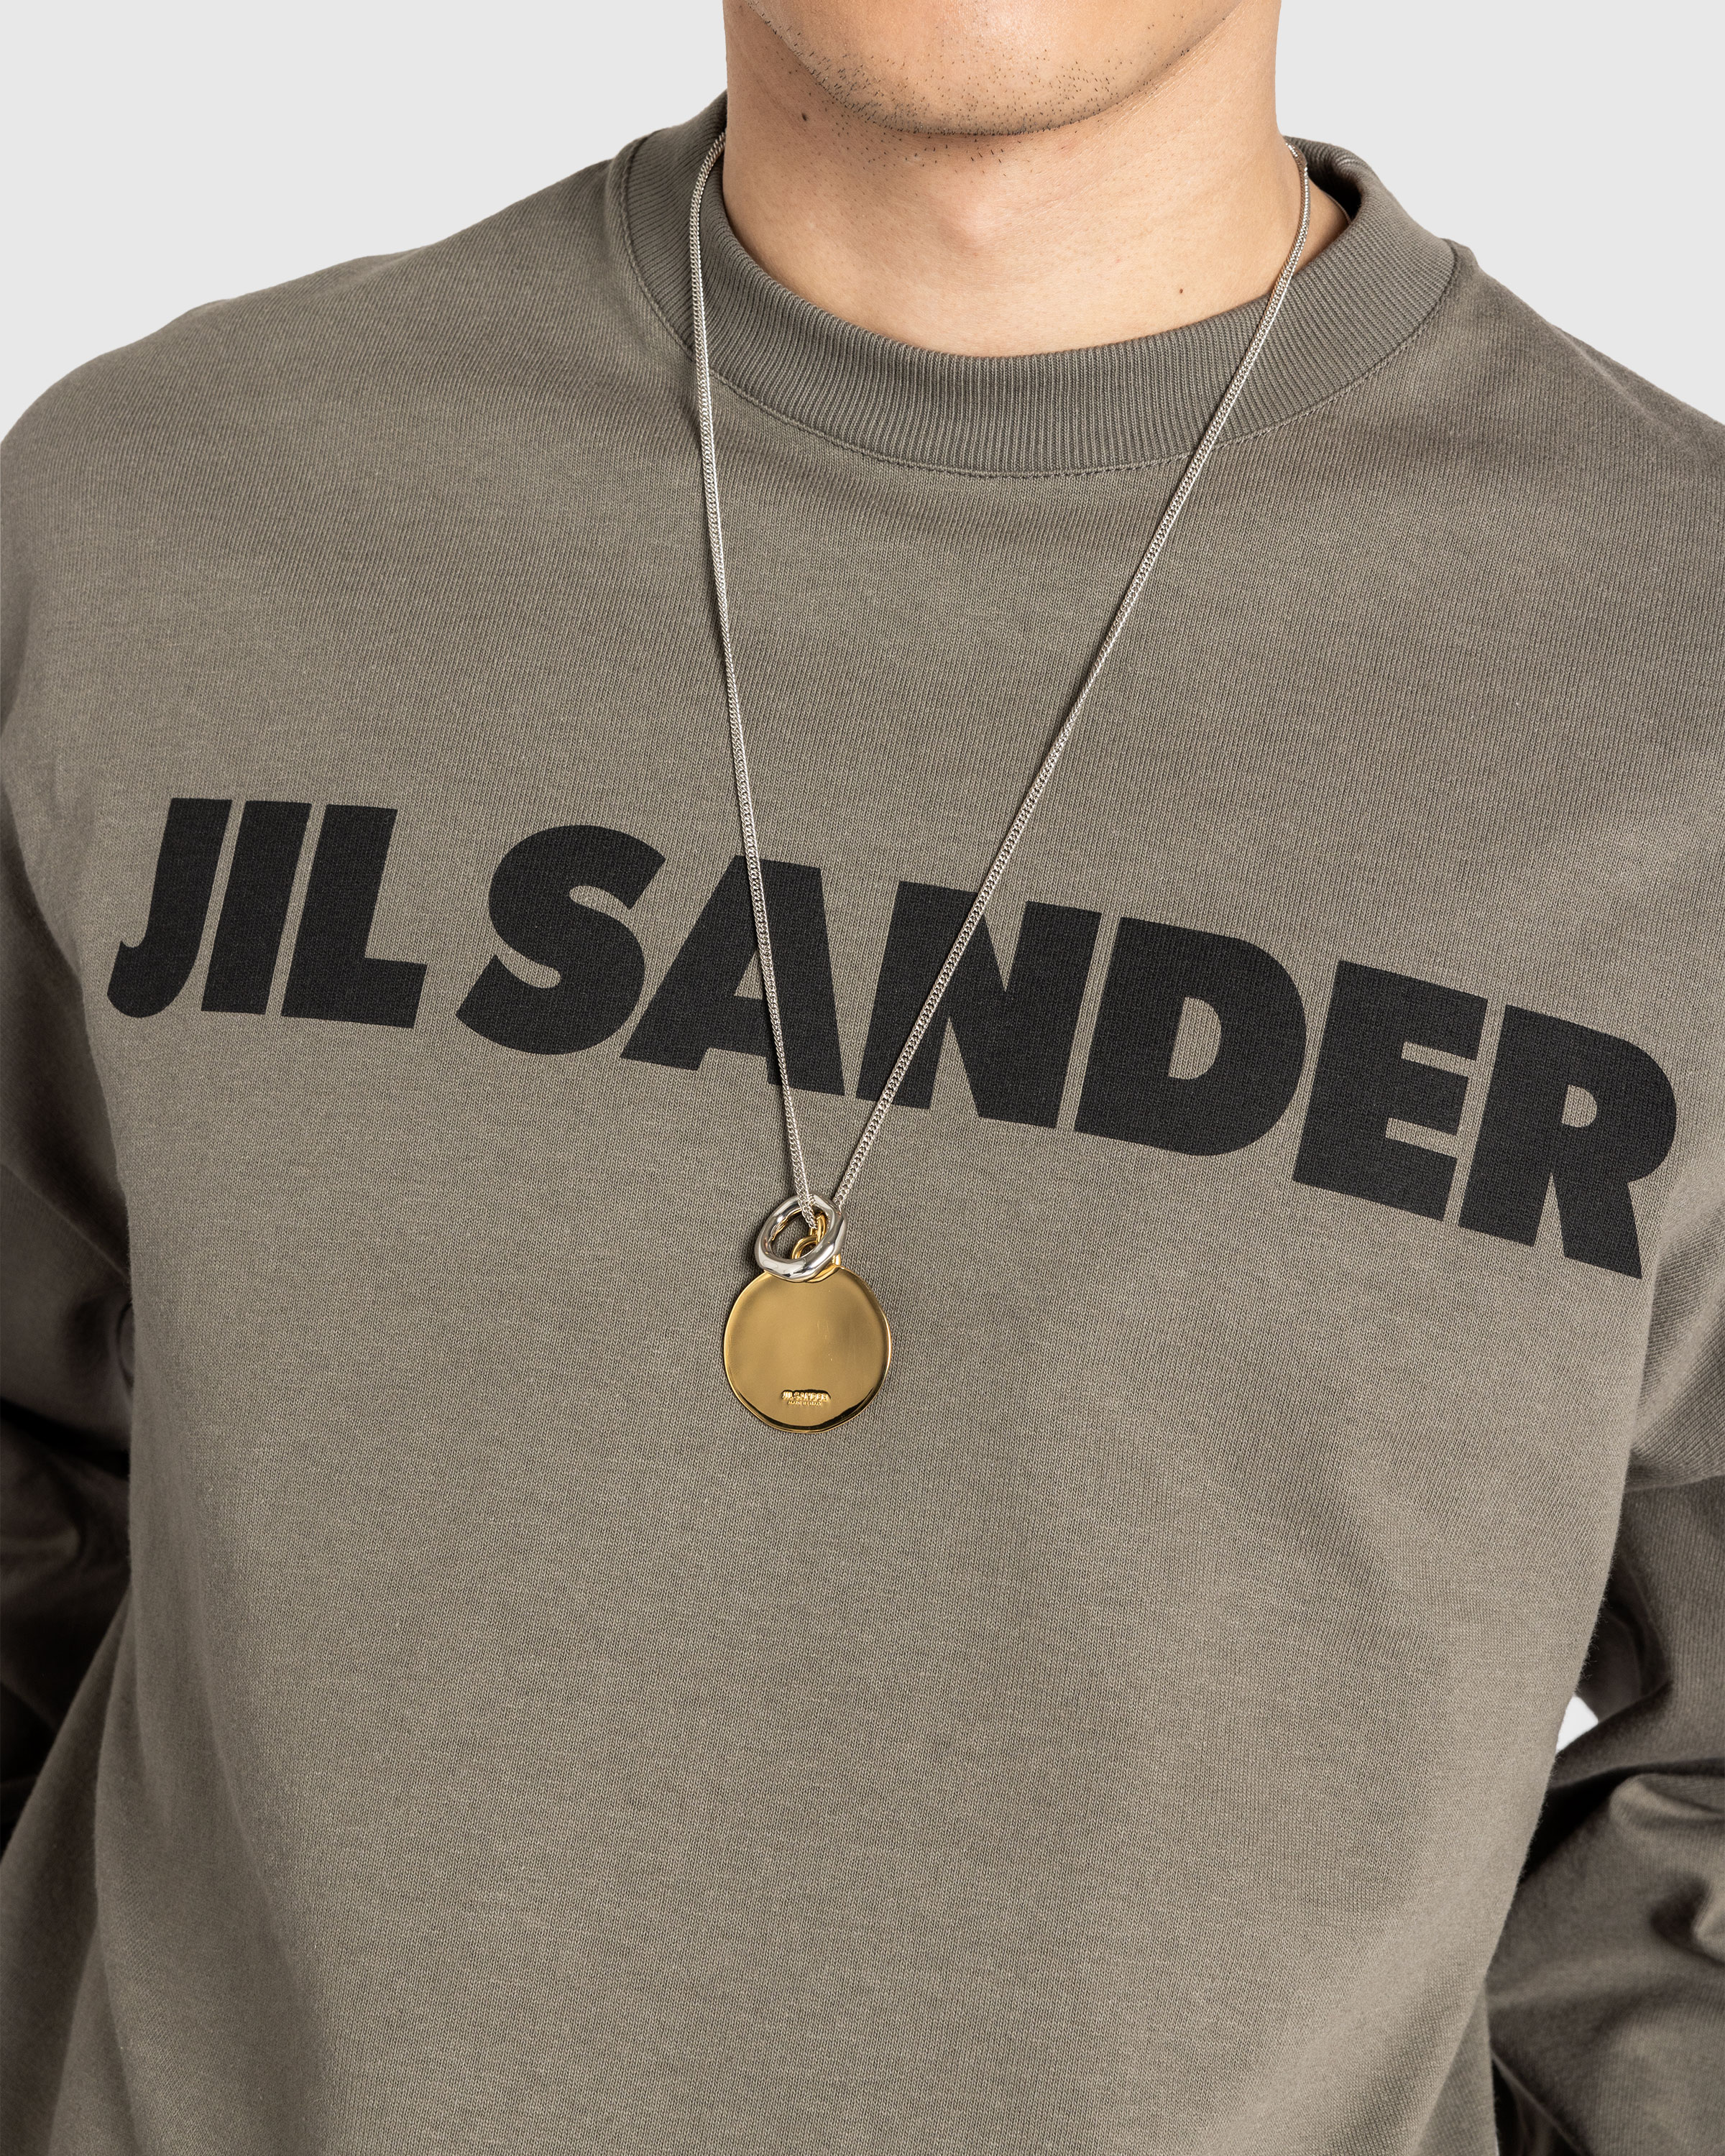 Jil Sander – BM9 Necklace 1 Gold/Silver - Earrings - Gold - Image 2